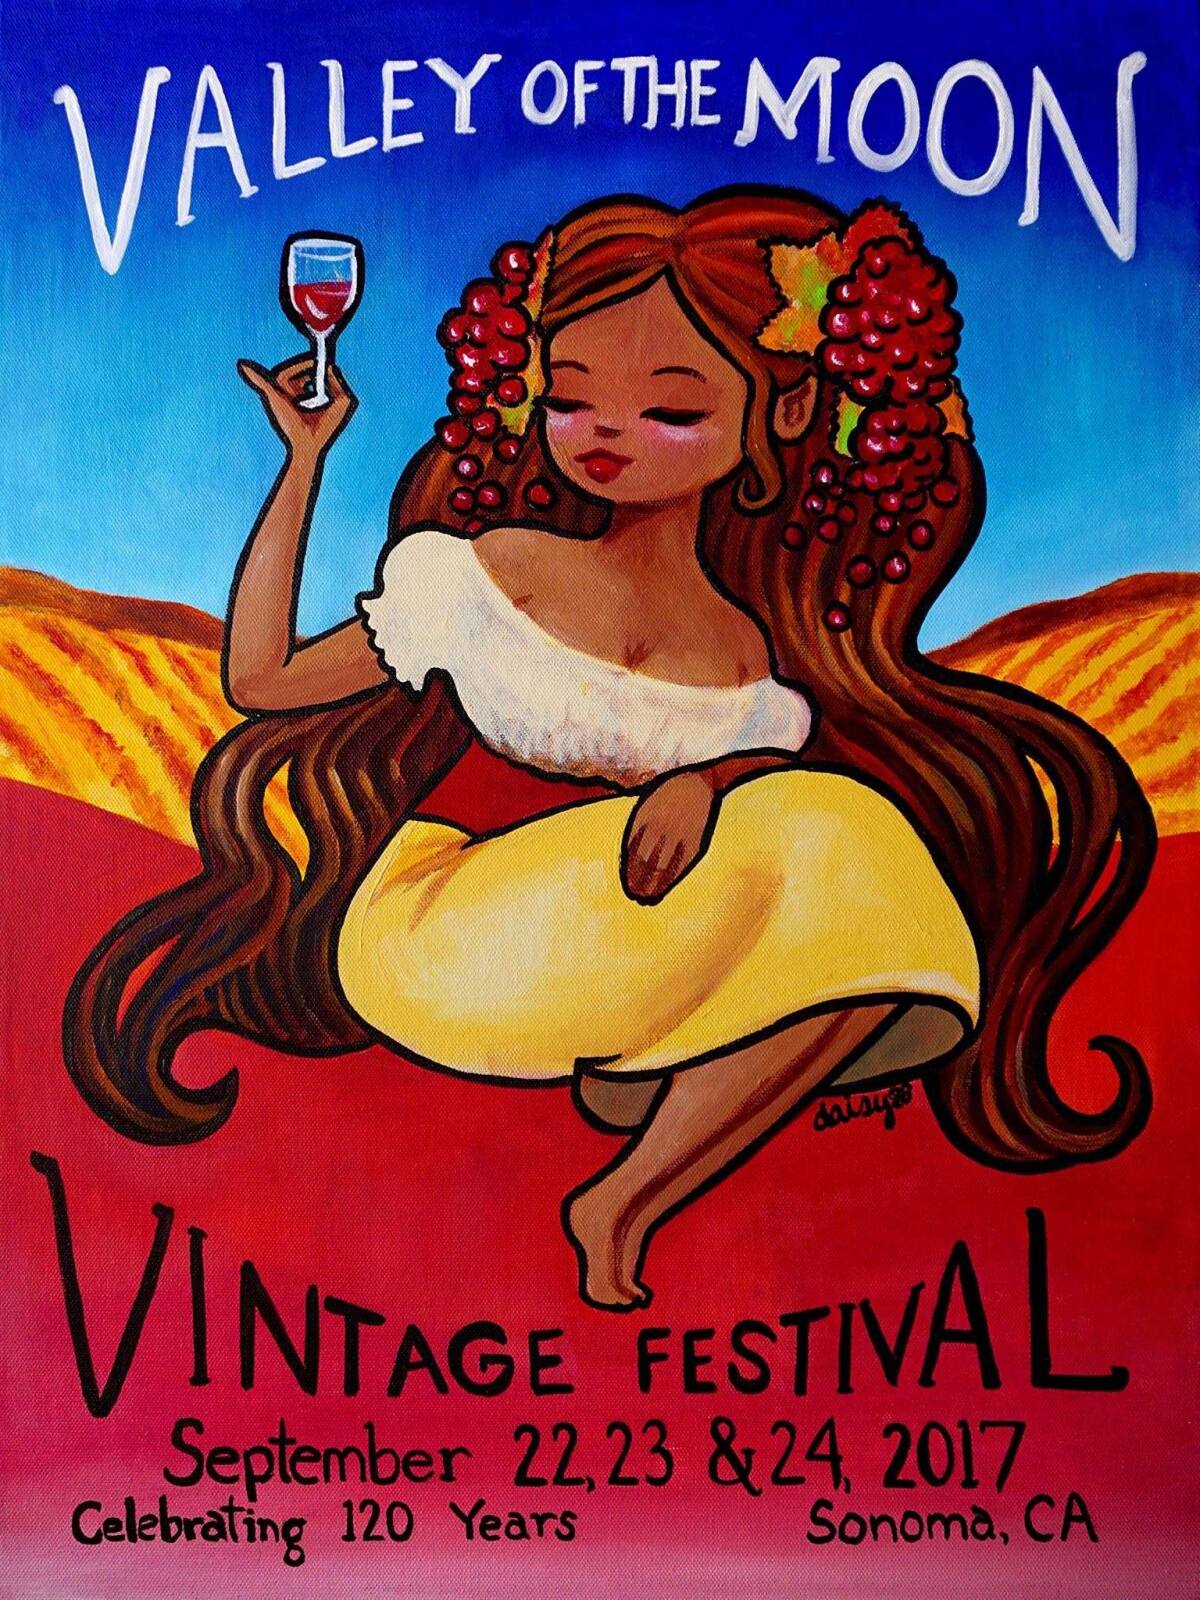 Entries due April 17 for Sonoma’s Vintage Festival poster contest